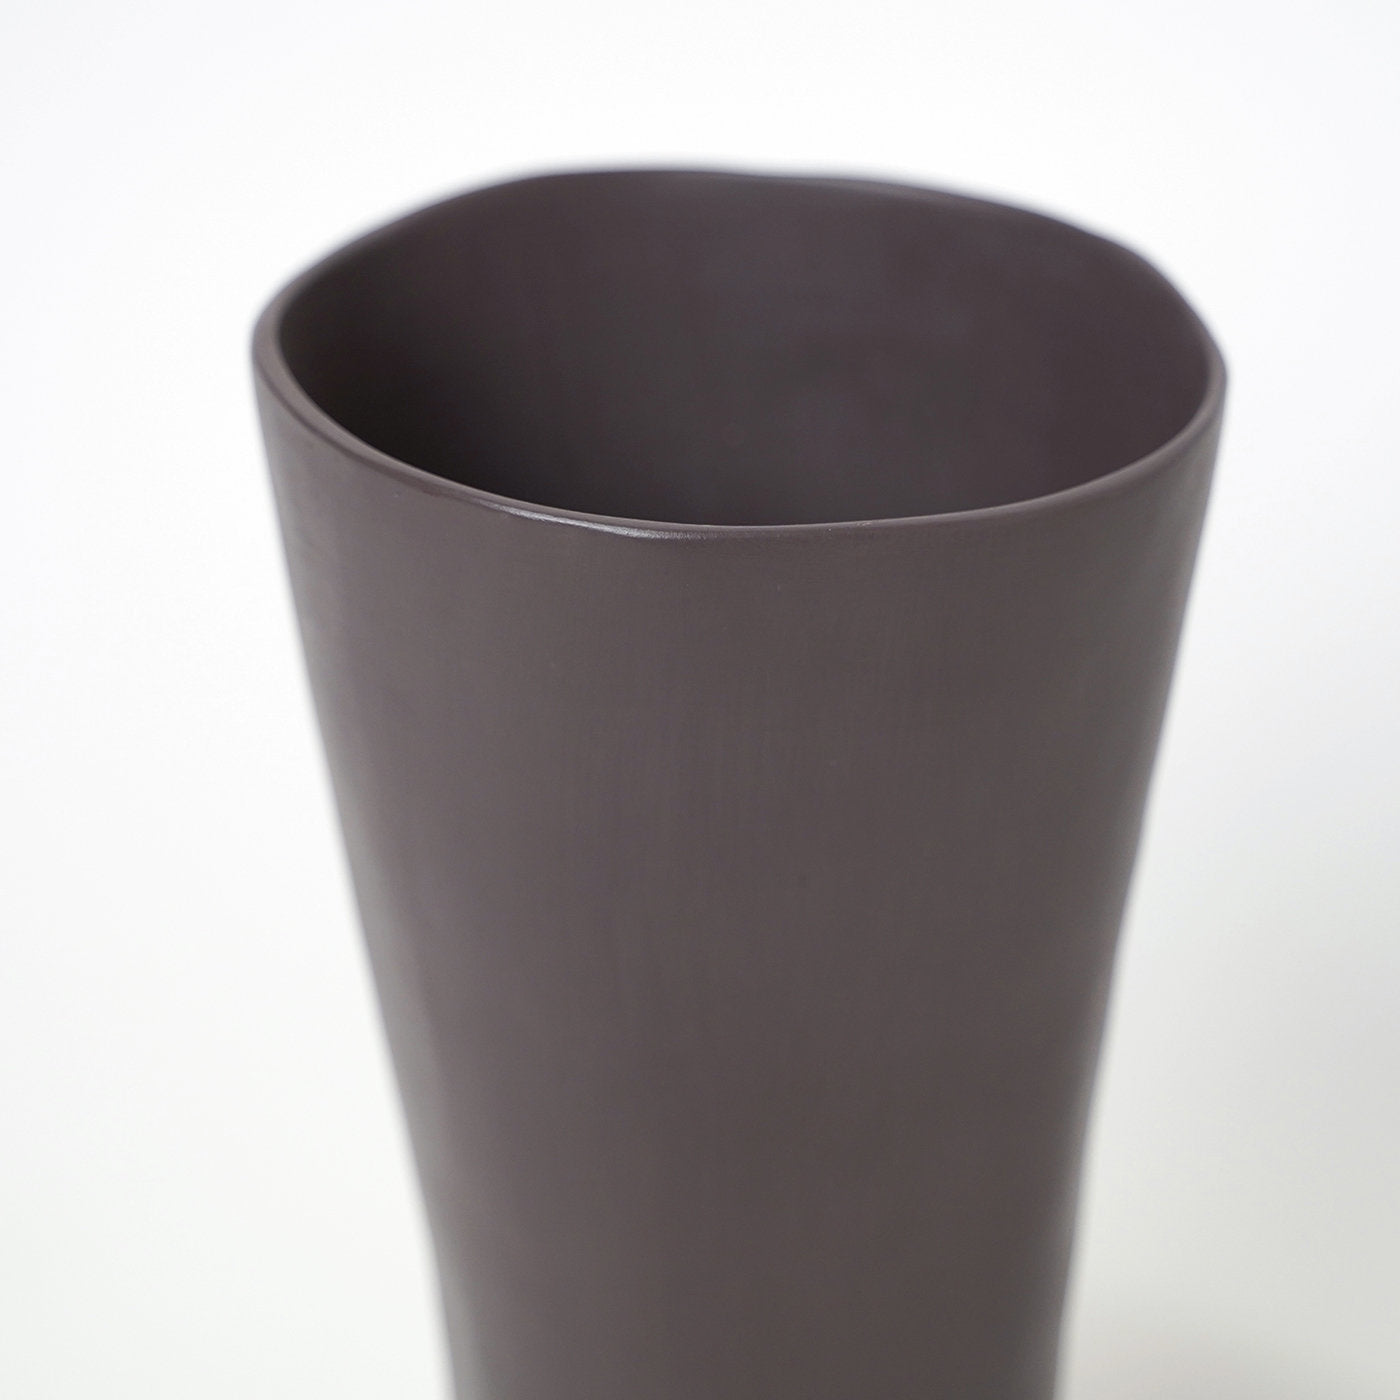 Onda Small Vase Gray - Alternative view 1